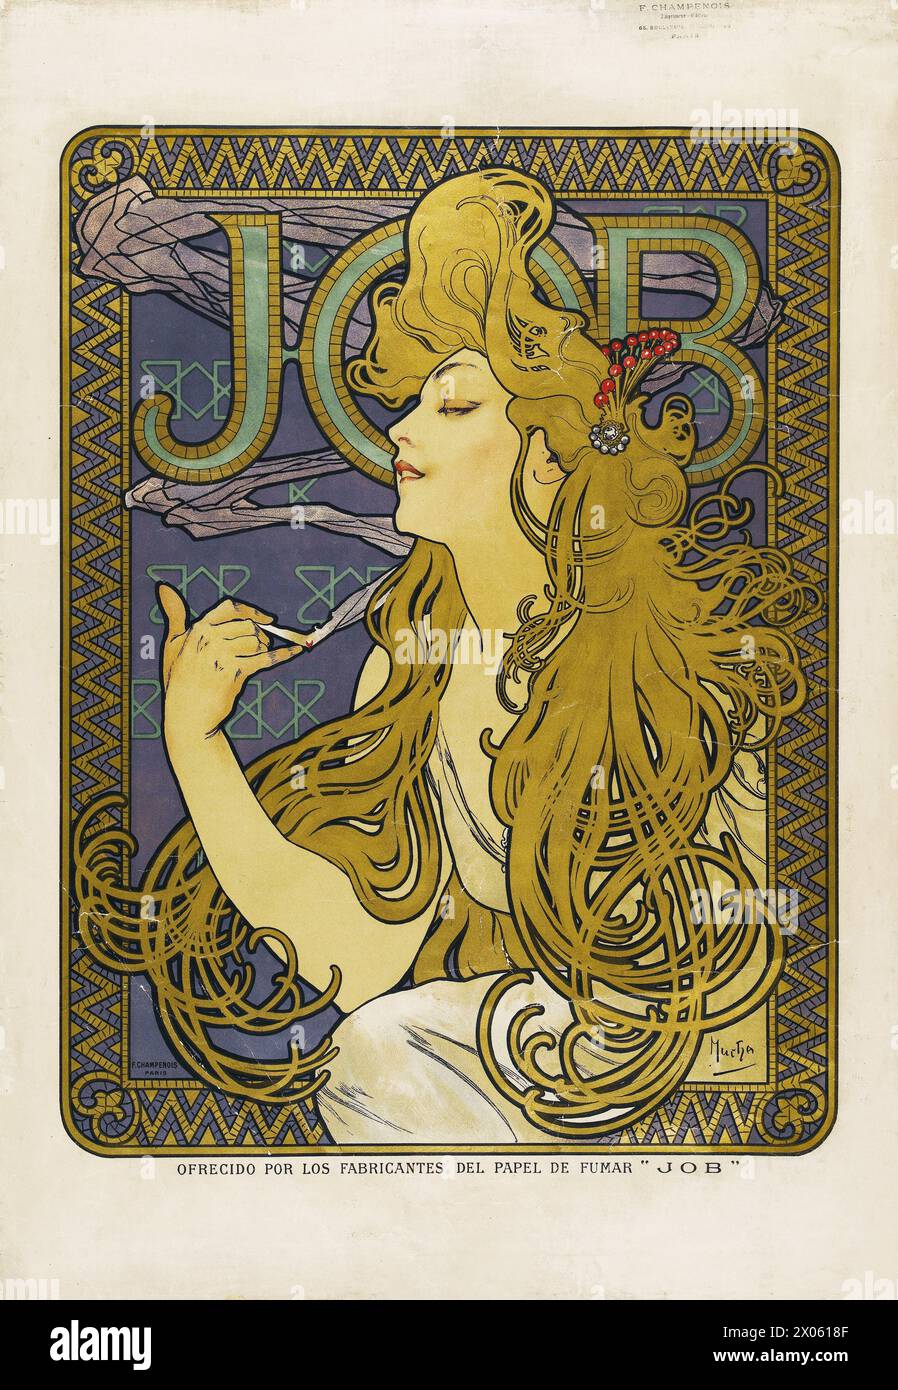 Job. Ofrecido por los manufacturers del papel de fumar 'Job' - Advertising, cigarette paper by Alphonse Mucha, 1890s - Art Nouveau Stock Photo